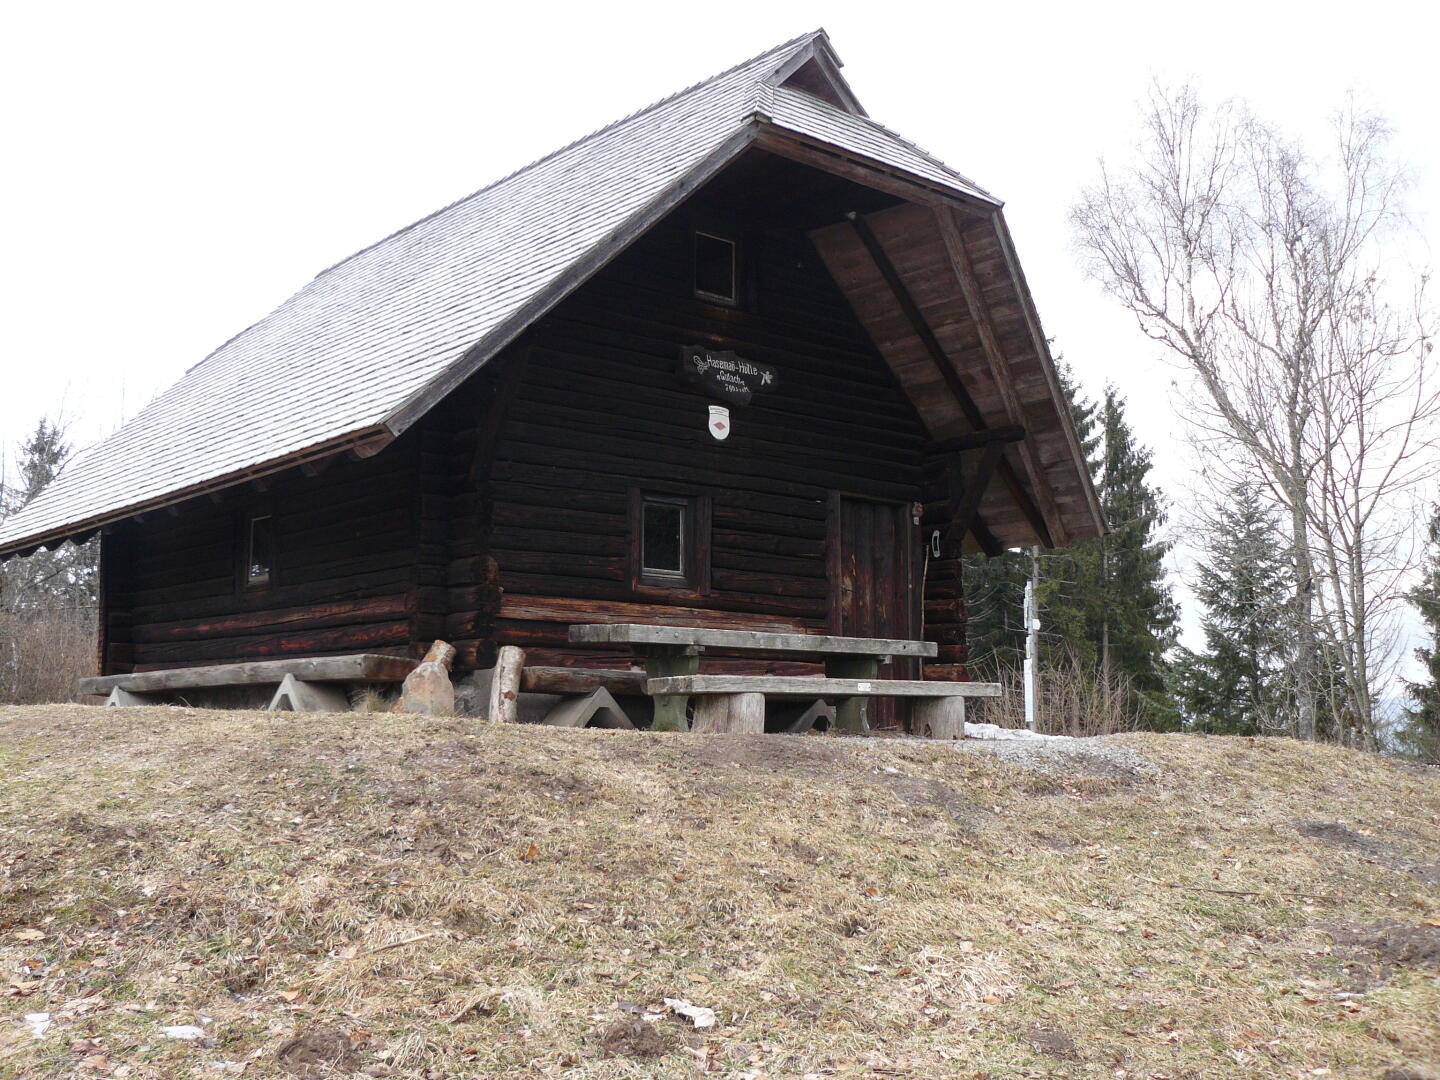 Die Haseman-Hütte auf dem Farrenkopf.